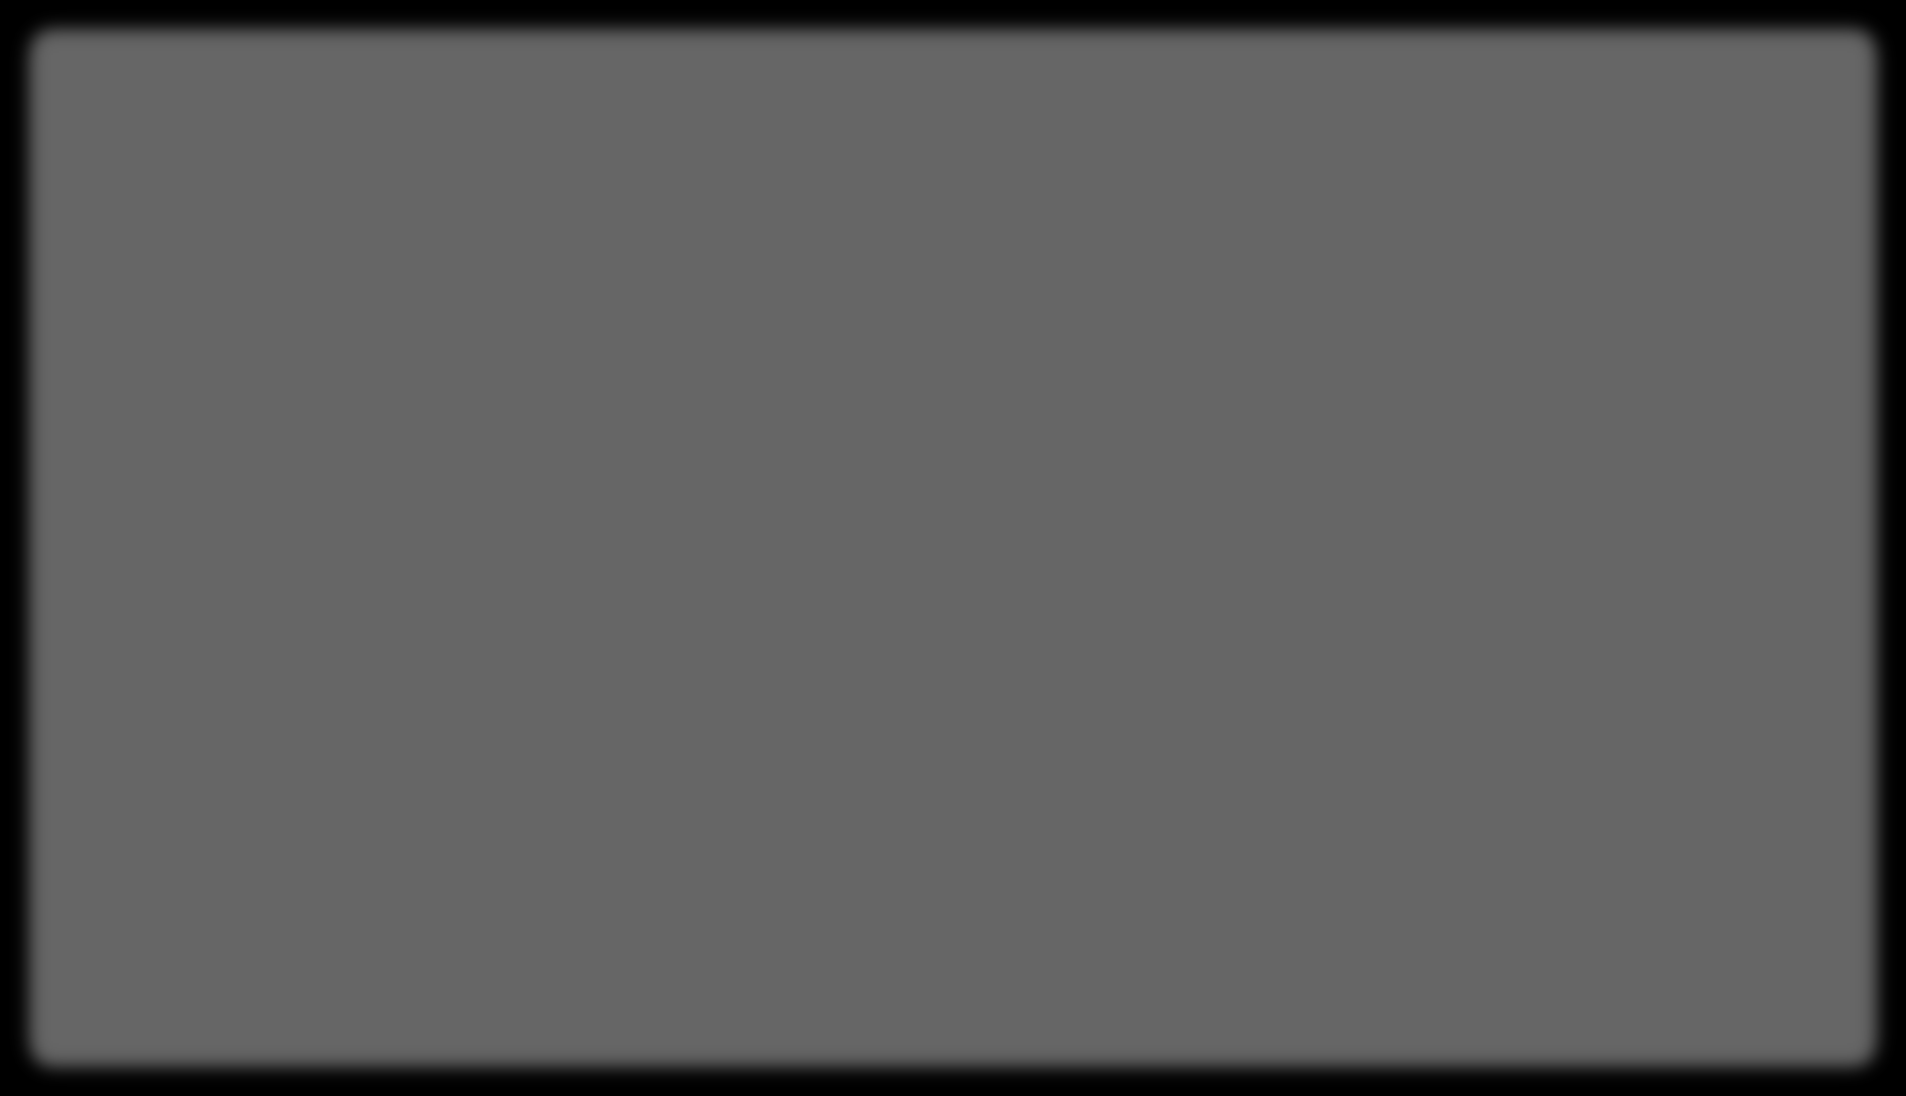 Projevy baroka v malířství: šerosvit (kontrast světla a stínu); Caravaggio, Diego Velázquez, Peter Paul Rubens, Rembrandt van Rijn. v hudbě: varhanní hra, fuga, opera; J. S. Bach, chrámové skladby J.